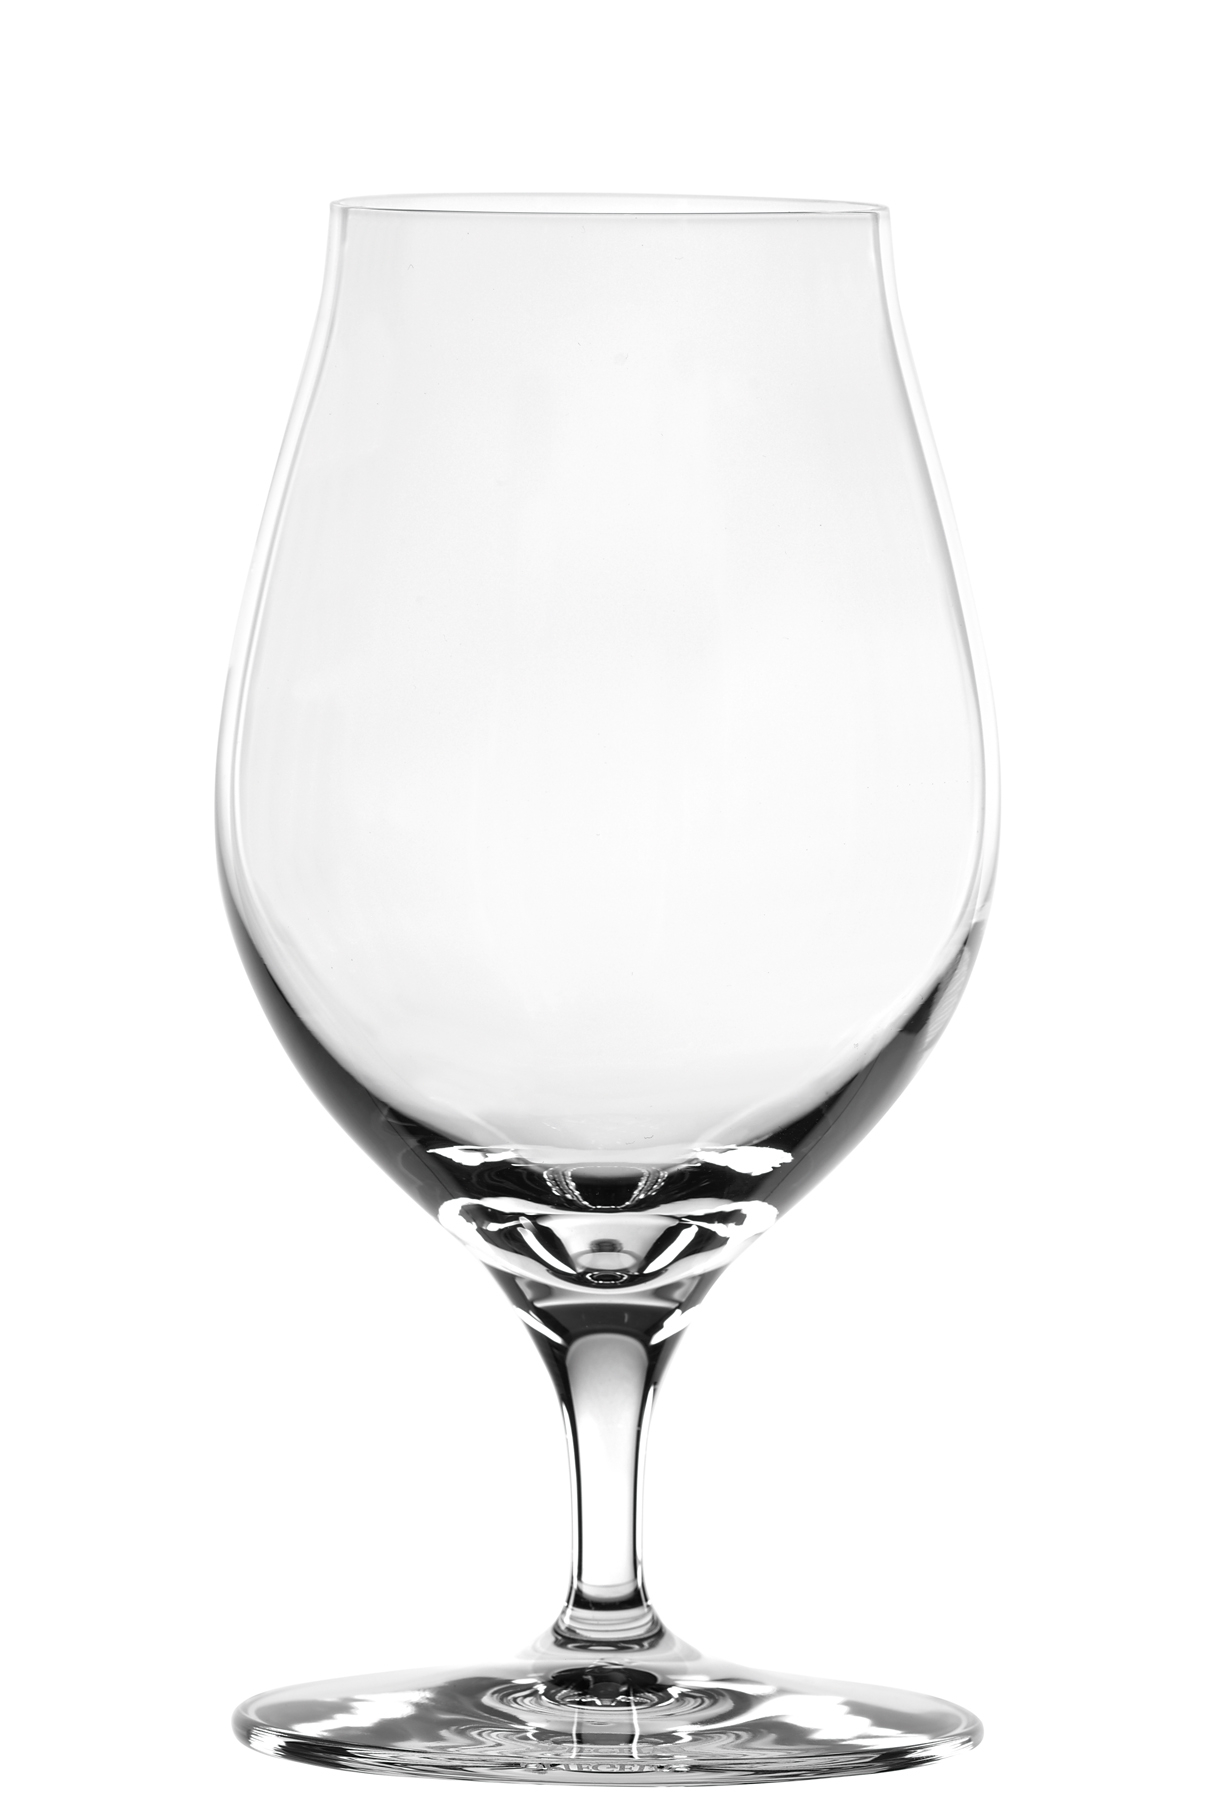 Barrel Aged Glas Craft Beer Glasses, Spiegelau - 480ml